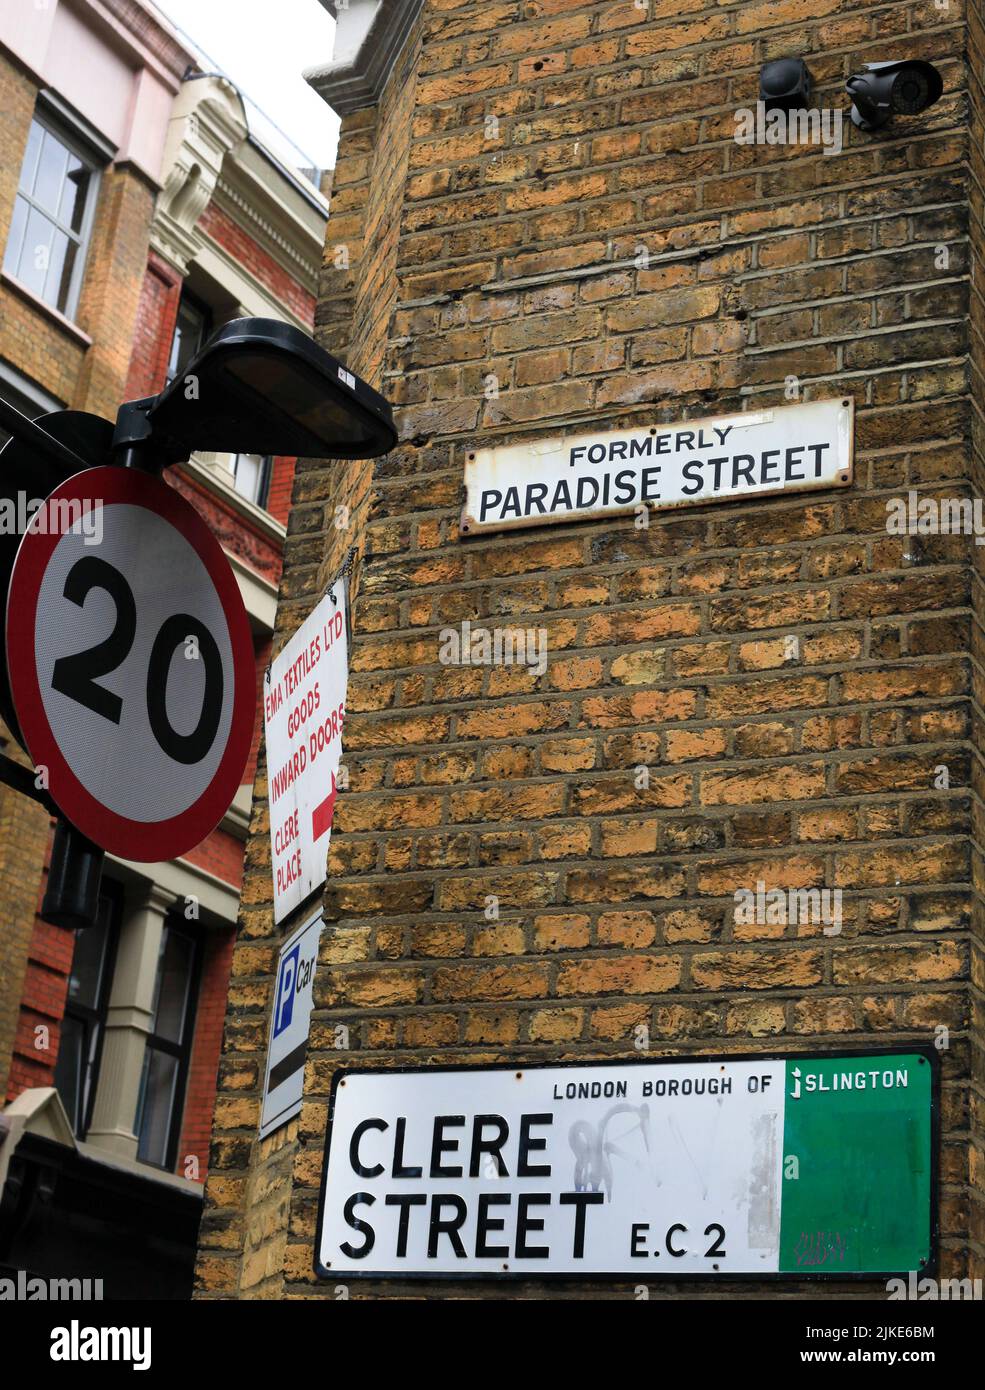 Formerly Paradise Street odd street sign Shoreditch London EC2 Stock Photo